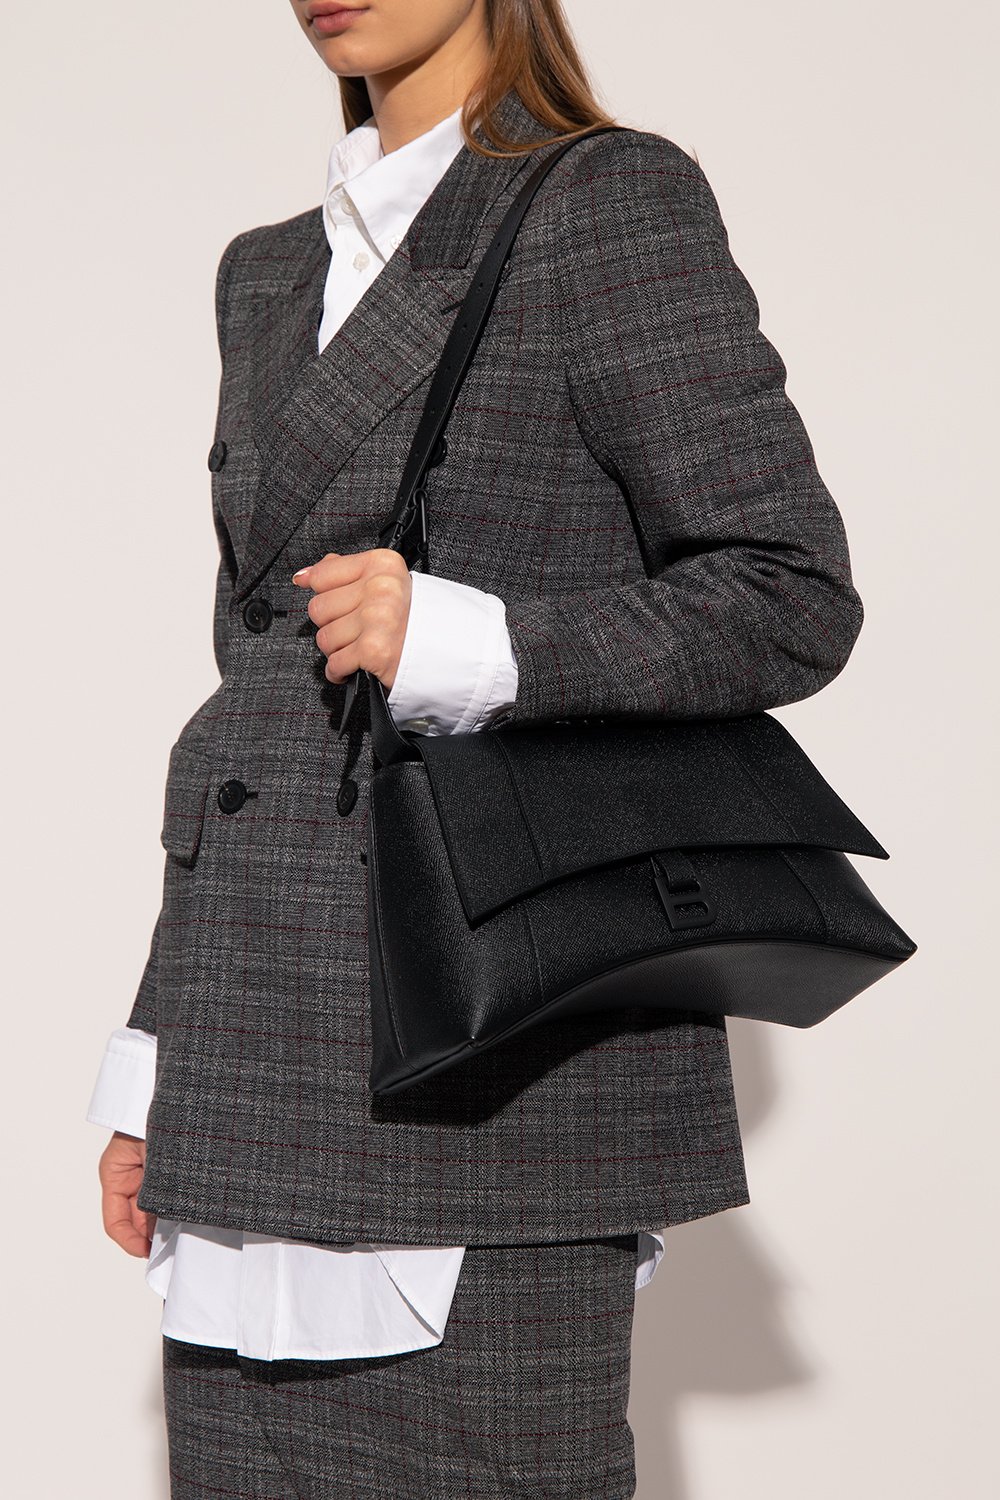 ‘Downtown Medium’ shoulder bag Balenciaga - Vitkac Australia